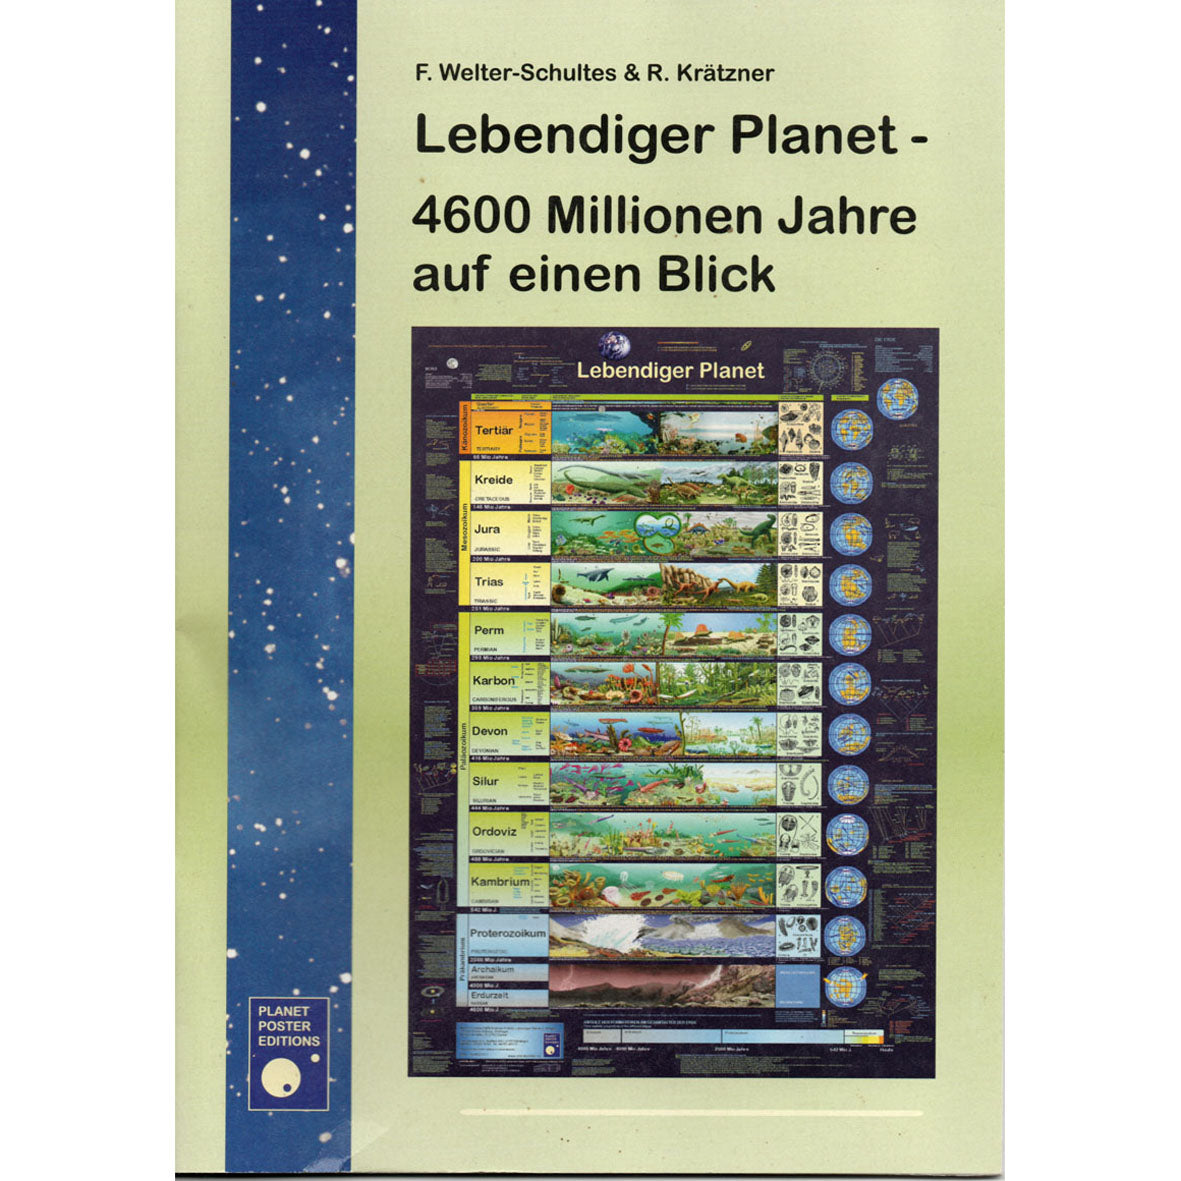 Beiheft zum Poster "Lebendiger Planet"